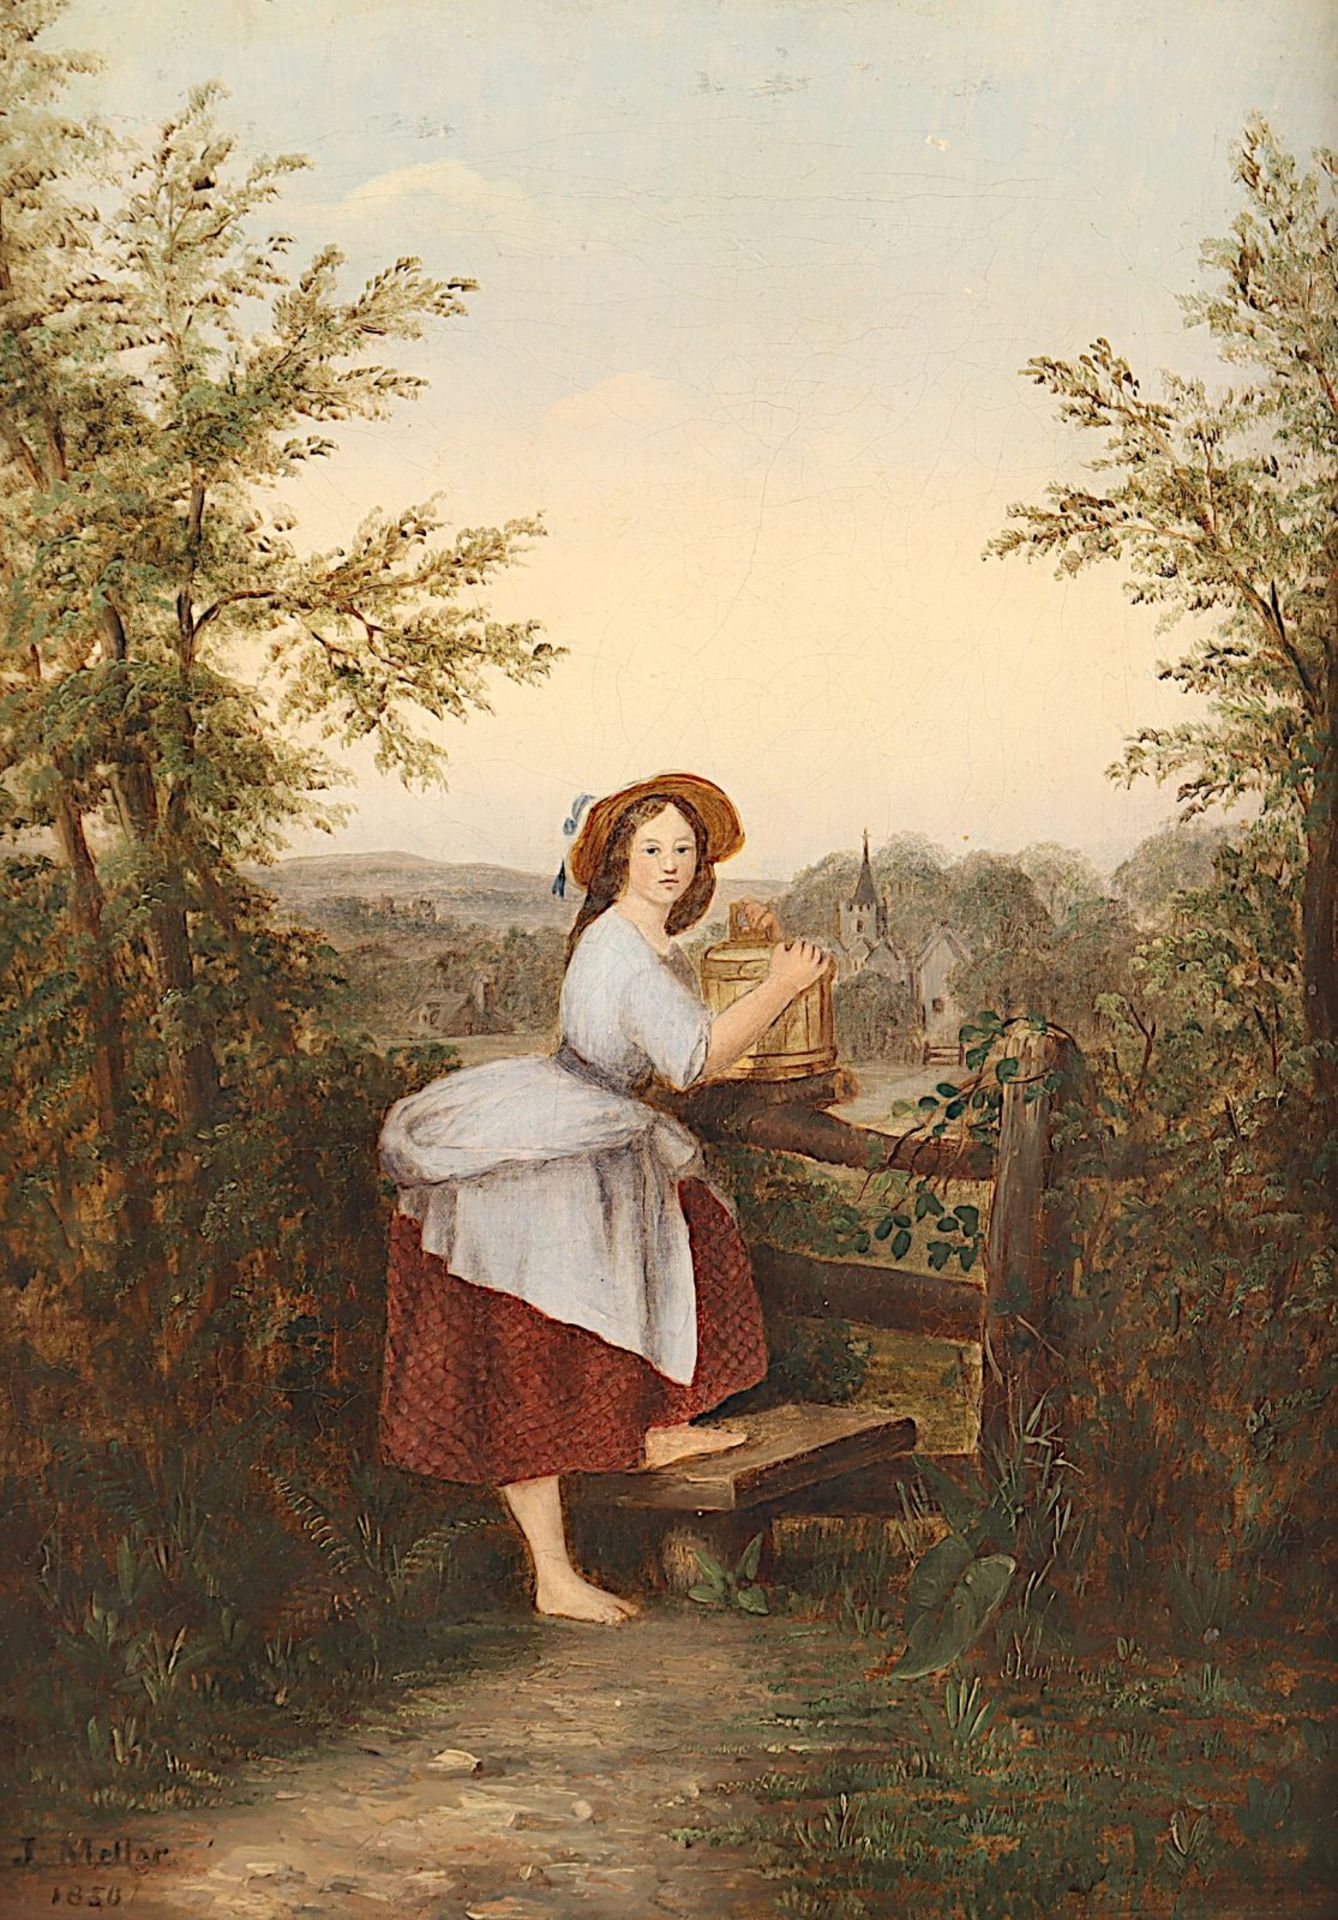 MELLAR, J. (Maler des 19.Jh.), "Junge Wasserträgering vor einer Landschaft", R.